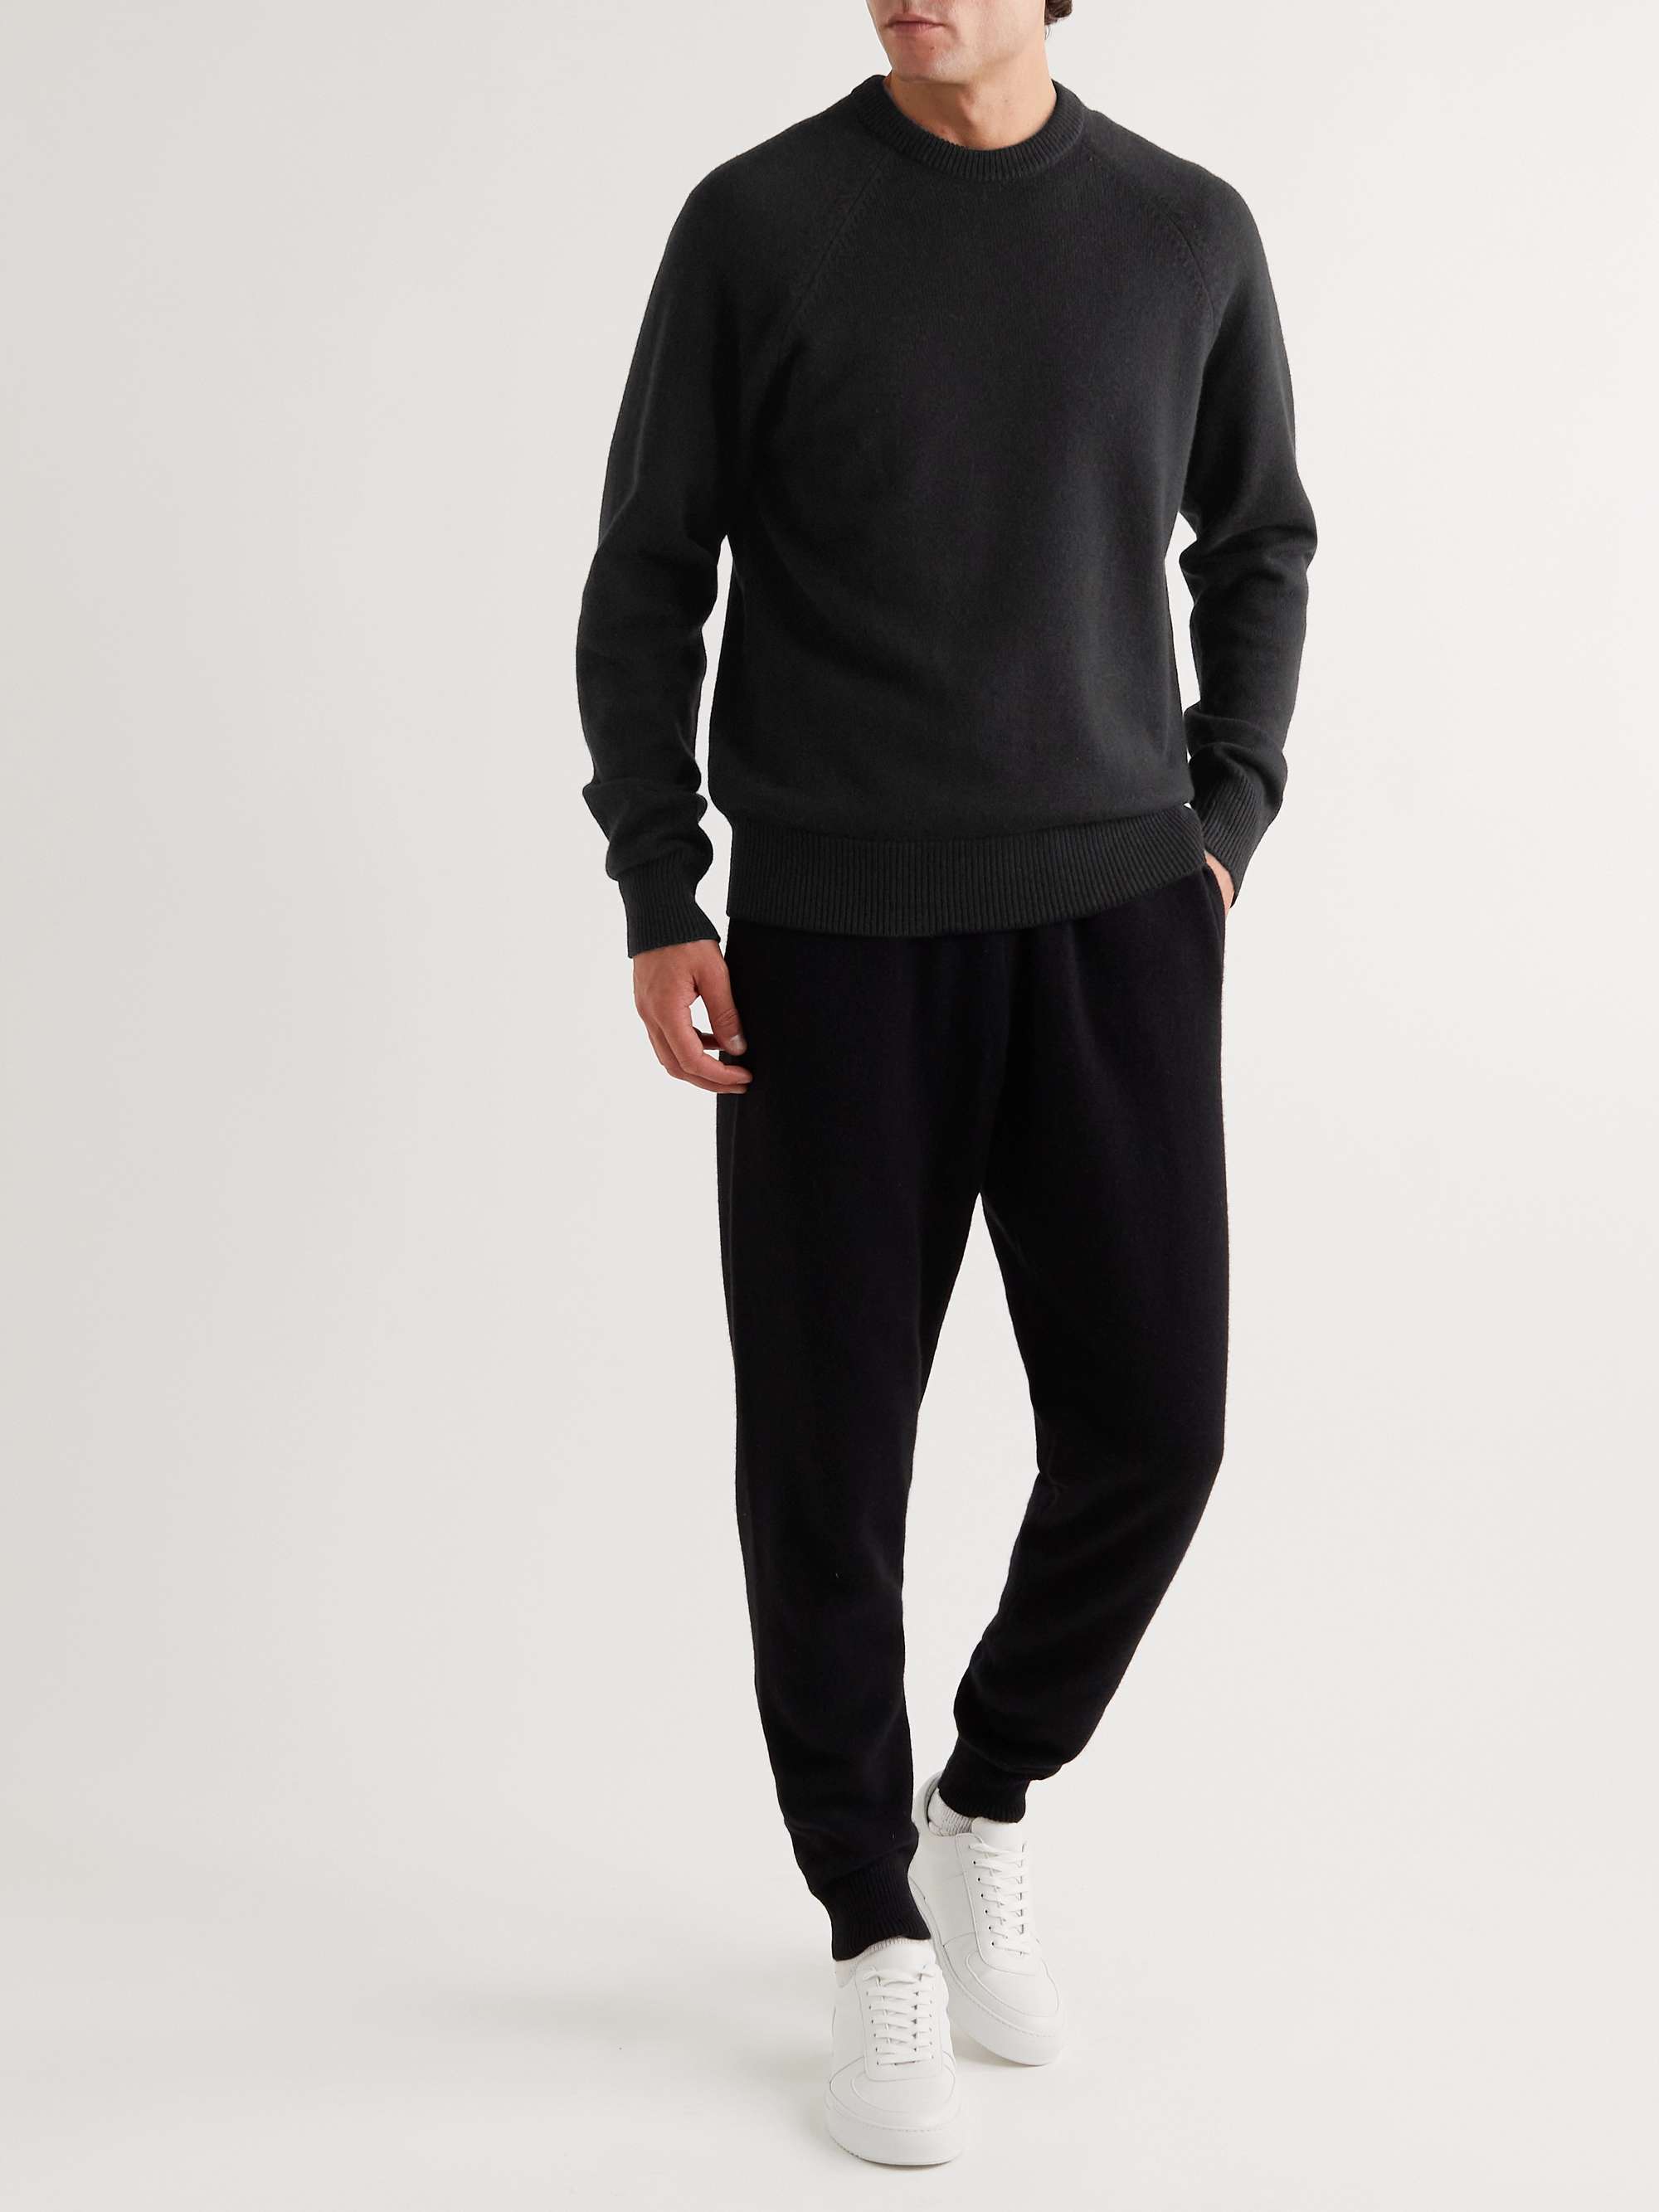 Black Cashmere Sweater | MR P. | MR PORTER